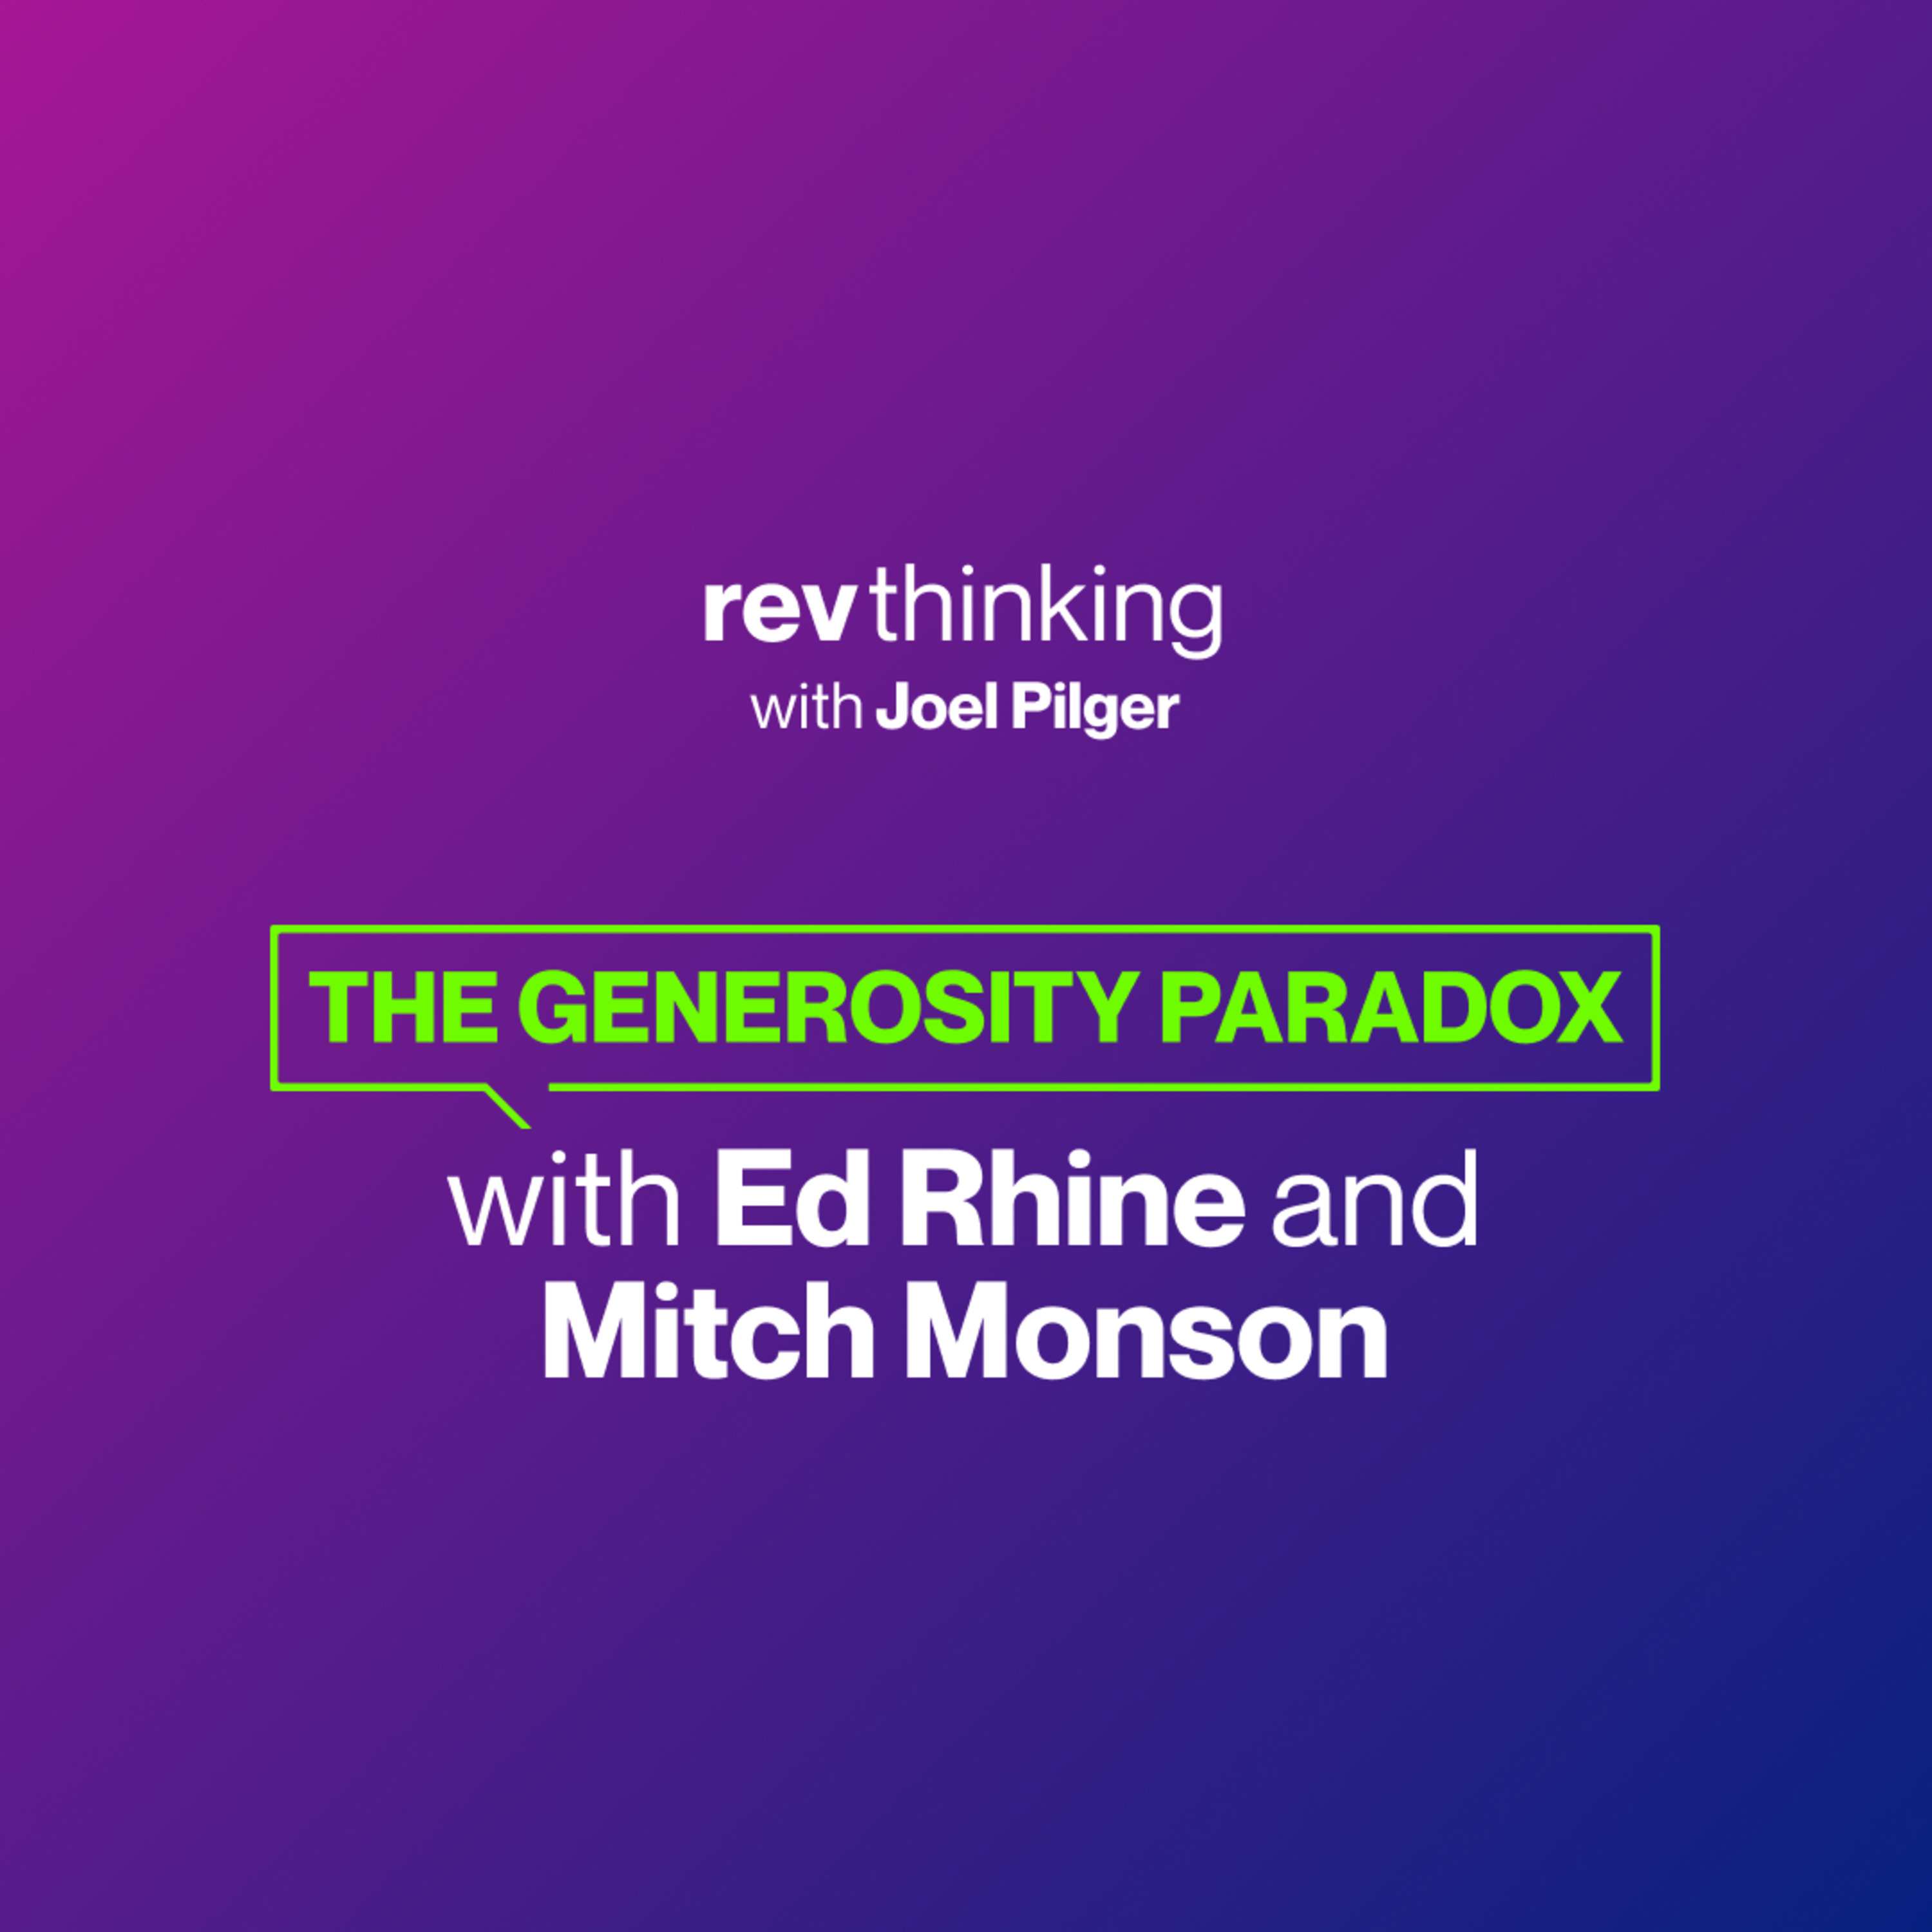 The Generosity Paradox with Ed Rhine and Mitch Monson